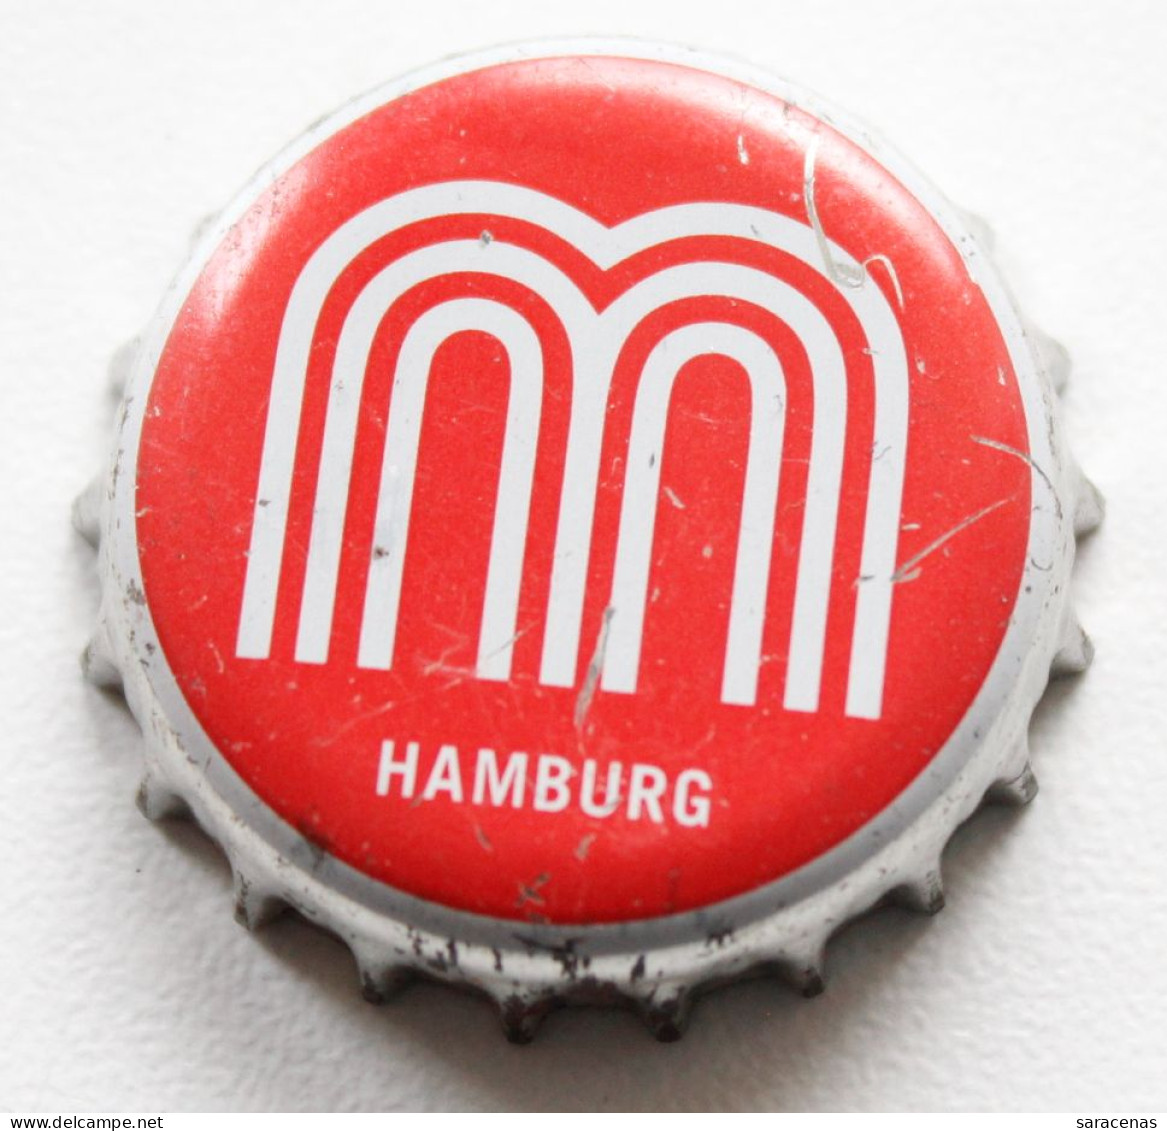 Germany M Hamburg Soda Bottle Cap - Limonade